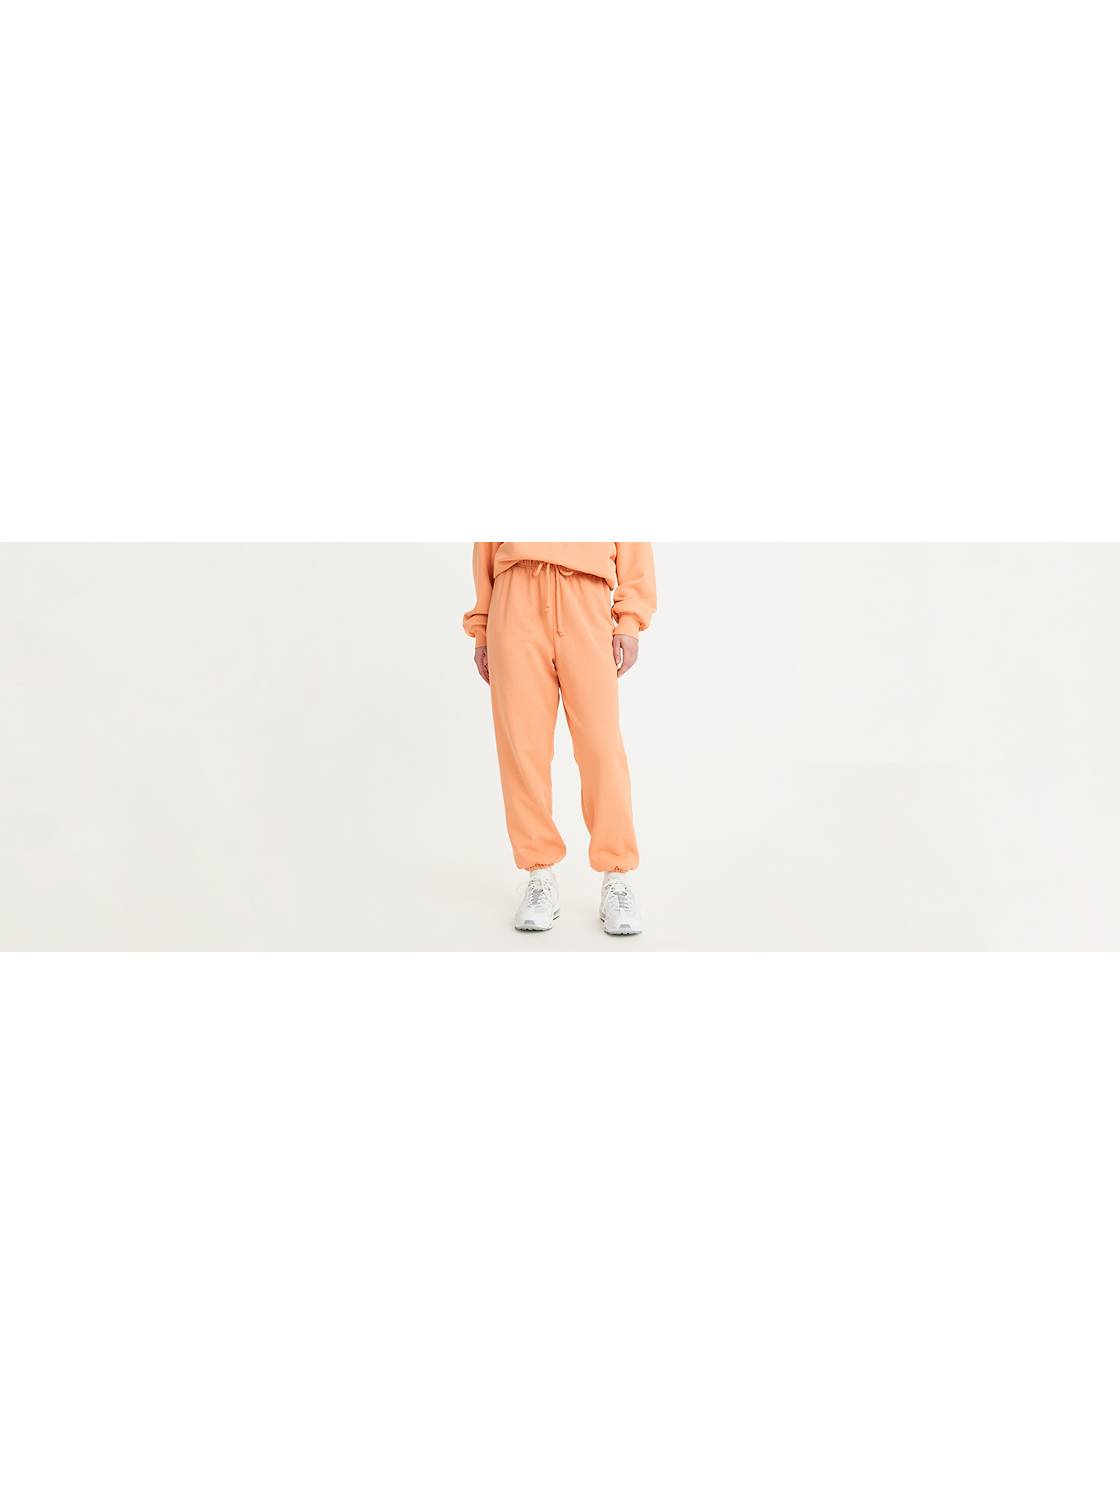  GRAPENT Orange Pants Orange Pants for Women Orange